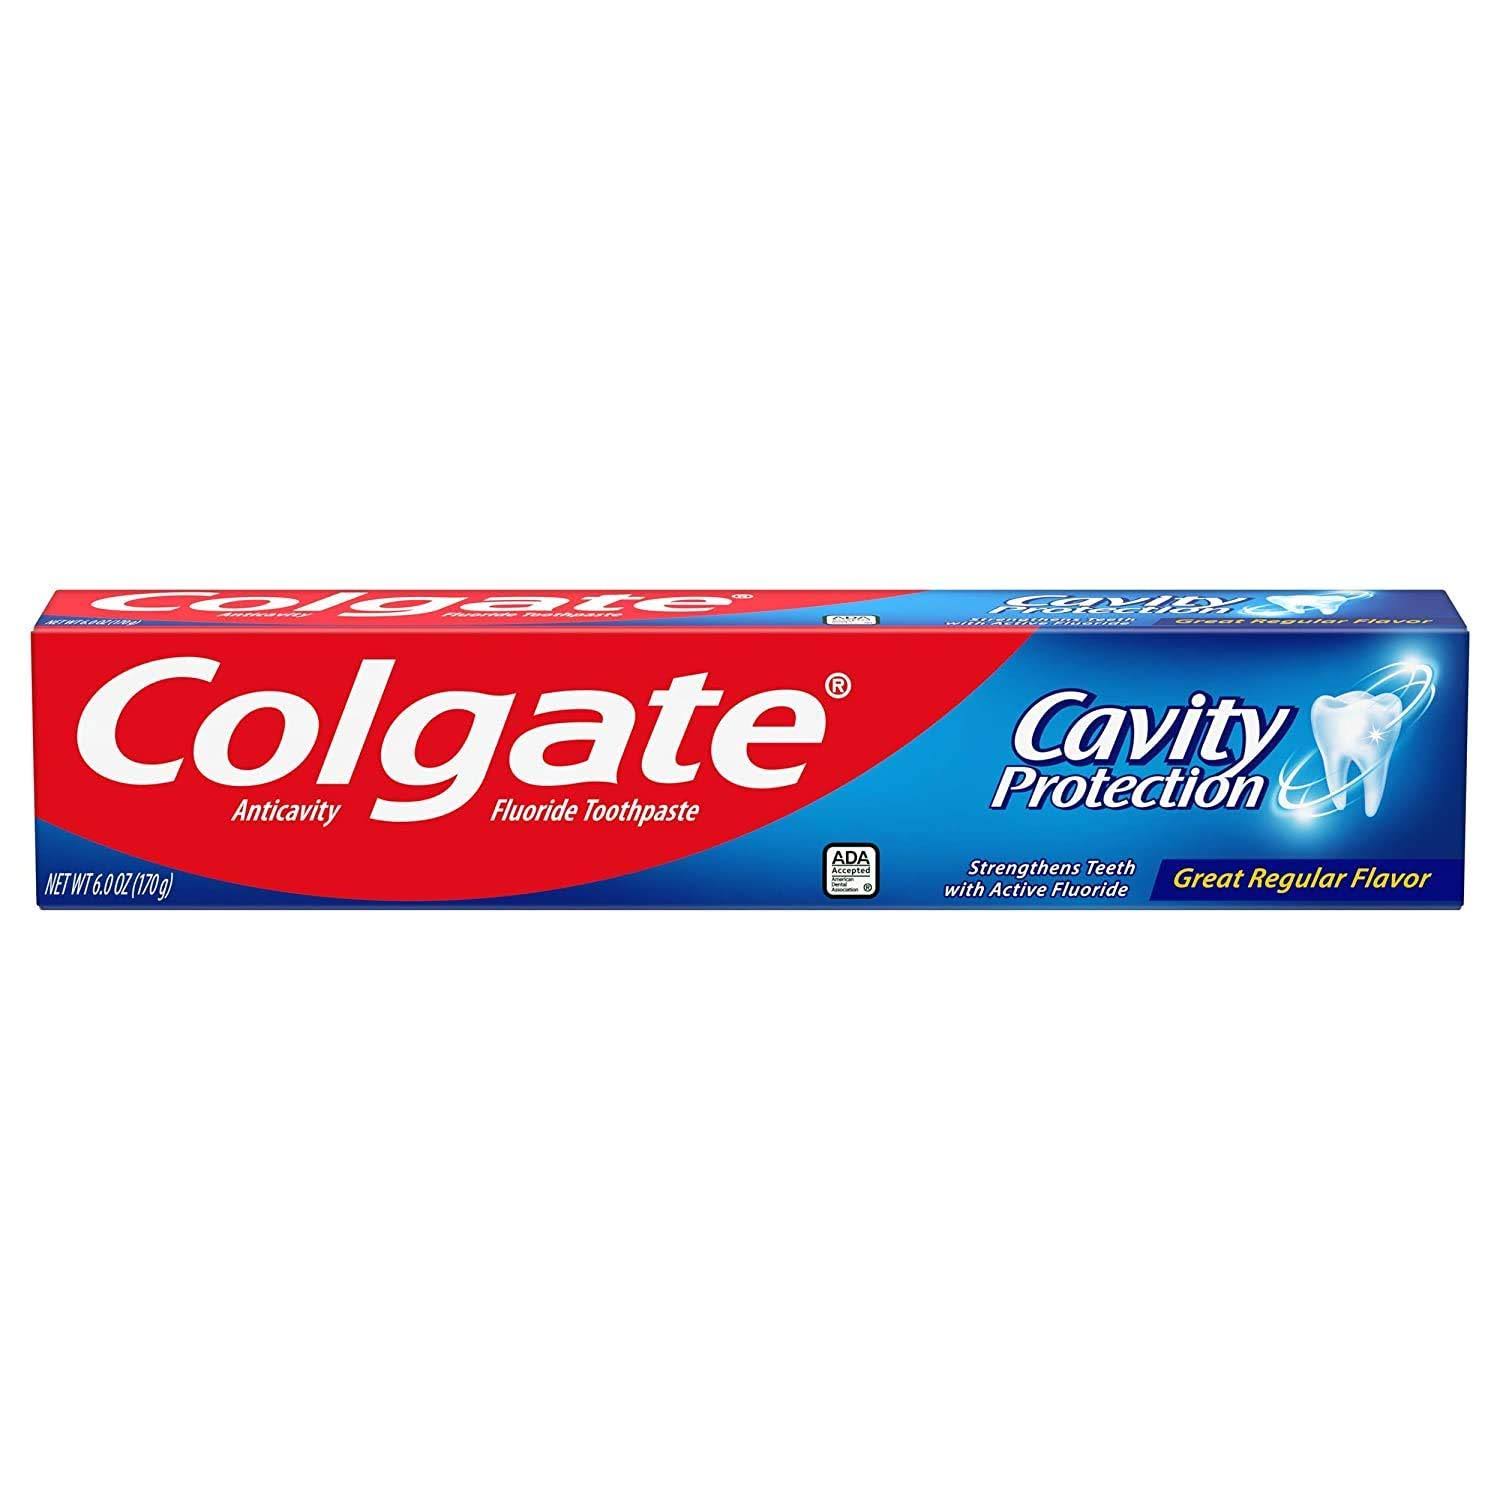 Colgate Cavity Protection Toothpaste - 6 oz